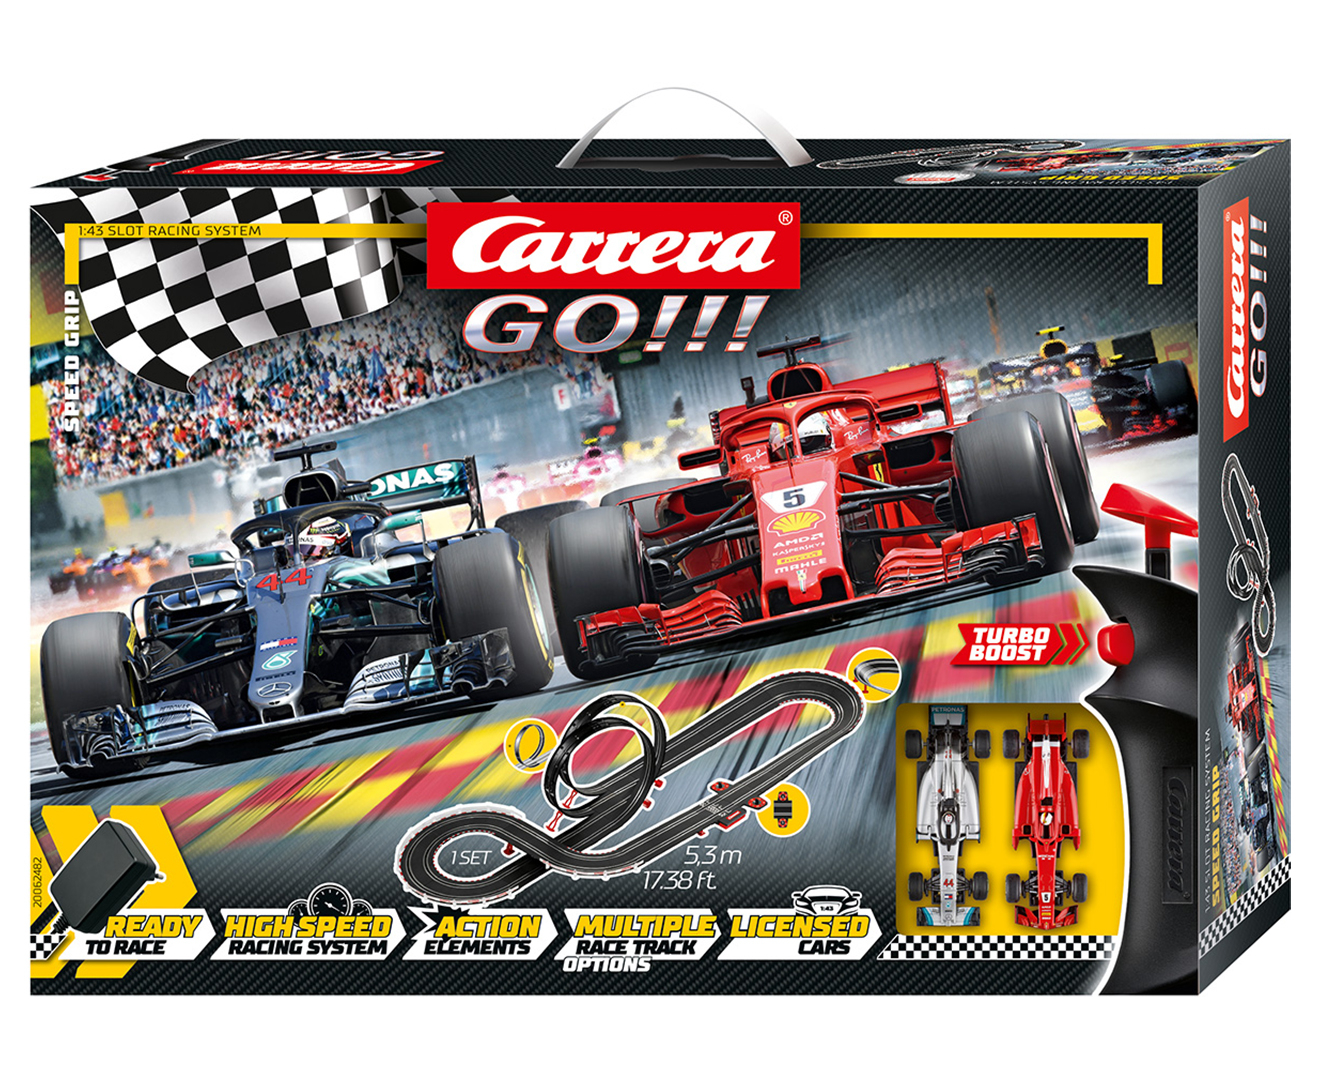 Carrera Go!!! Speed Grip Formula1 Slot Car Race Track Set 